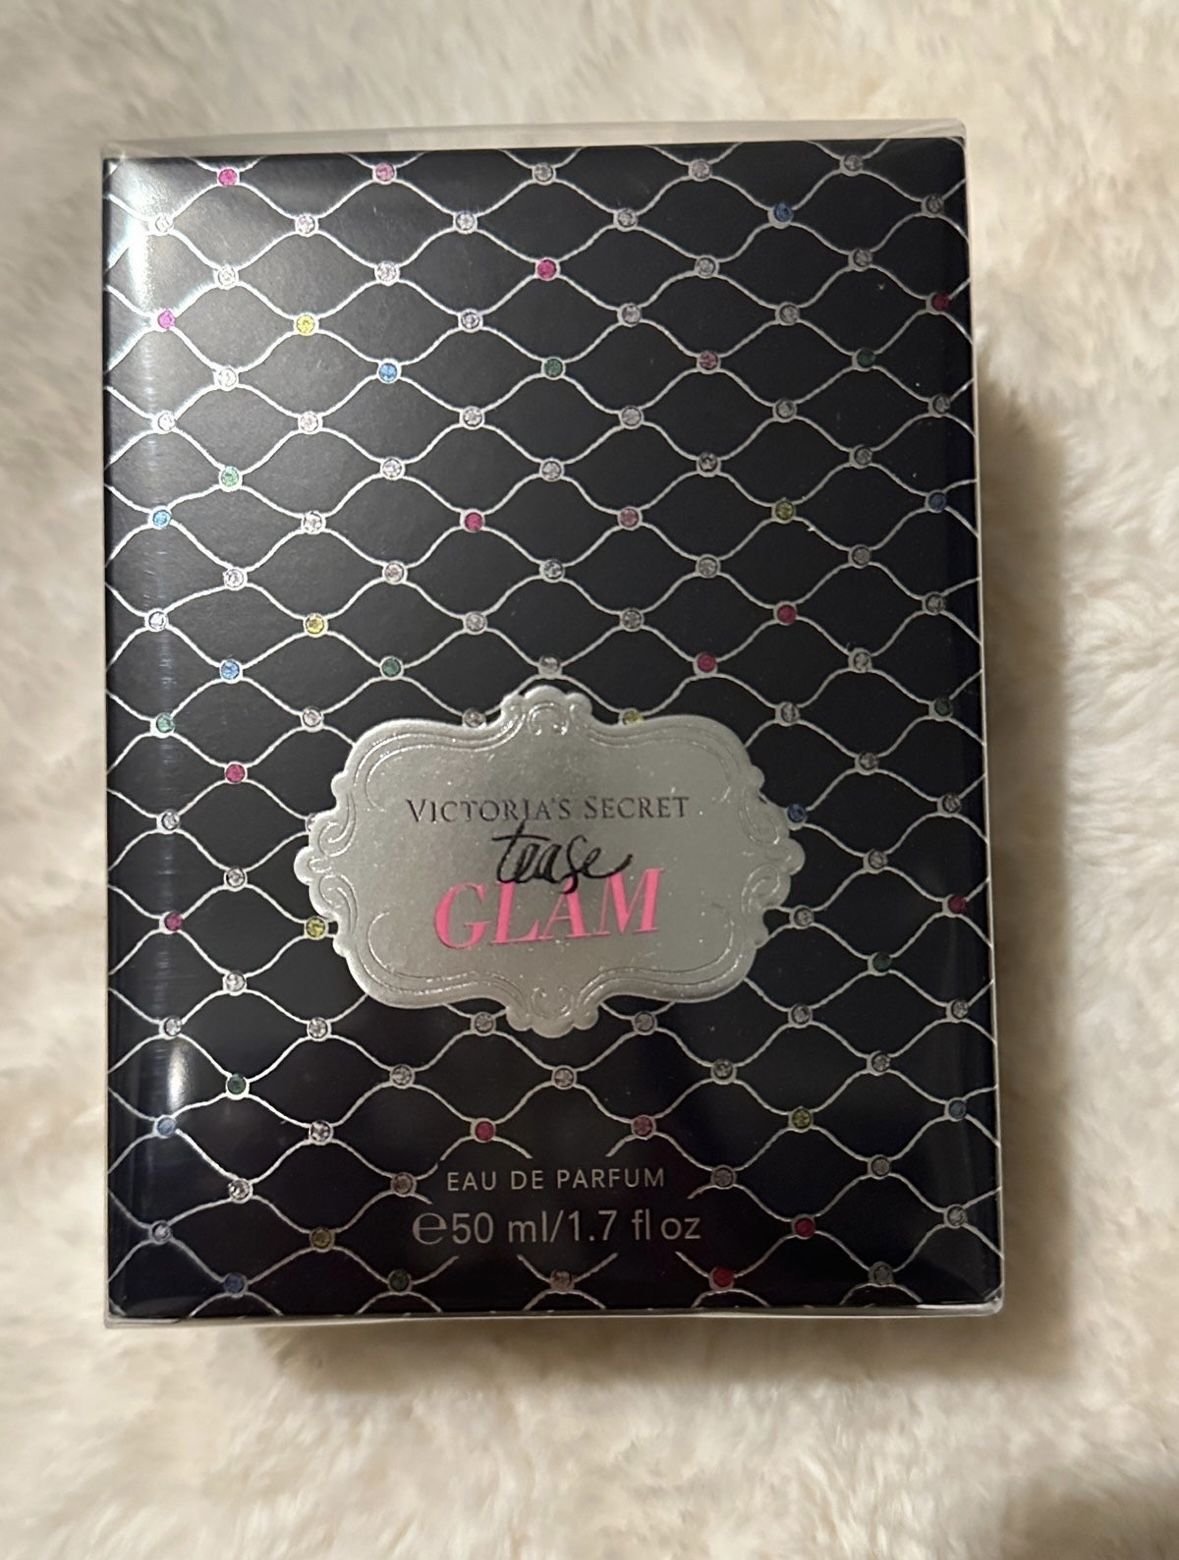 Victoria’s Secret Tease Glam perfume 1.7oz